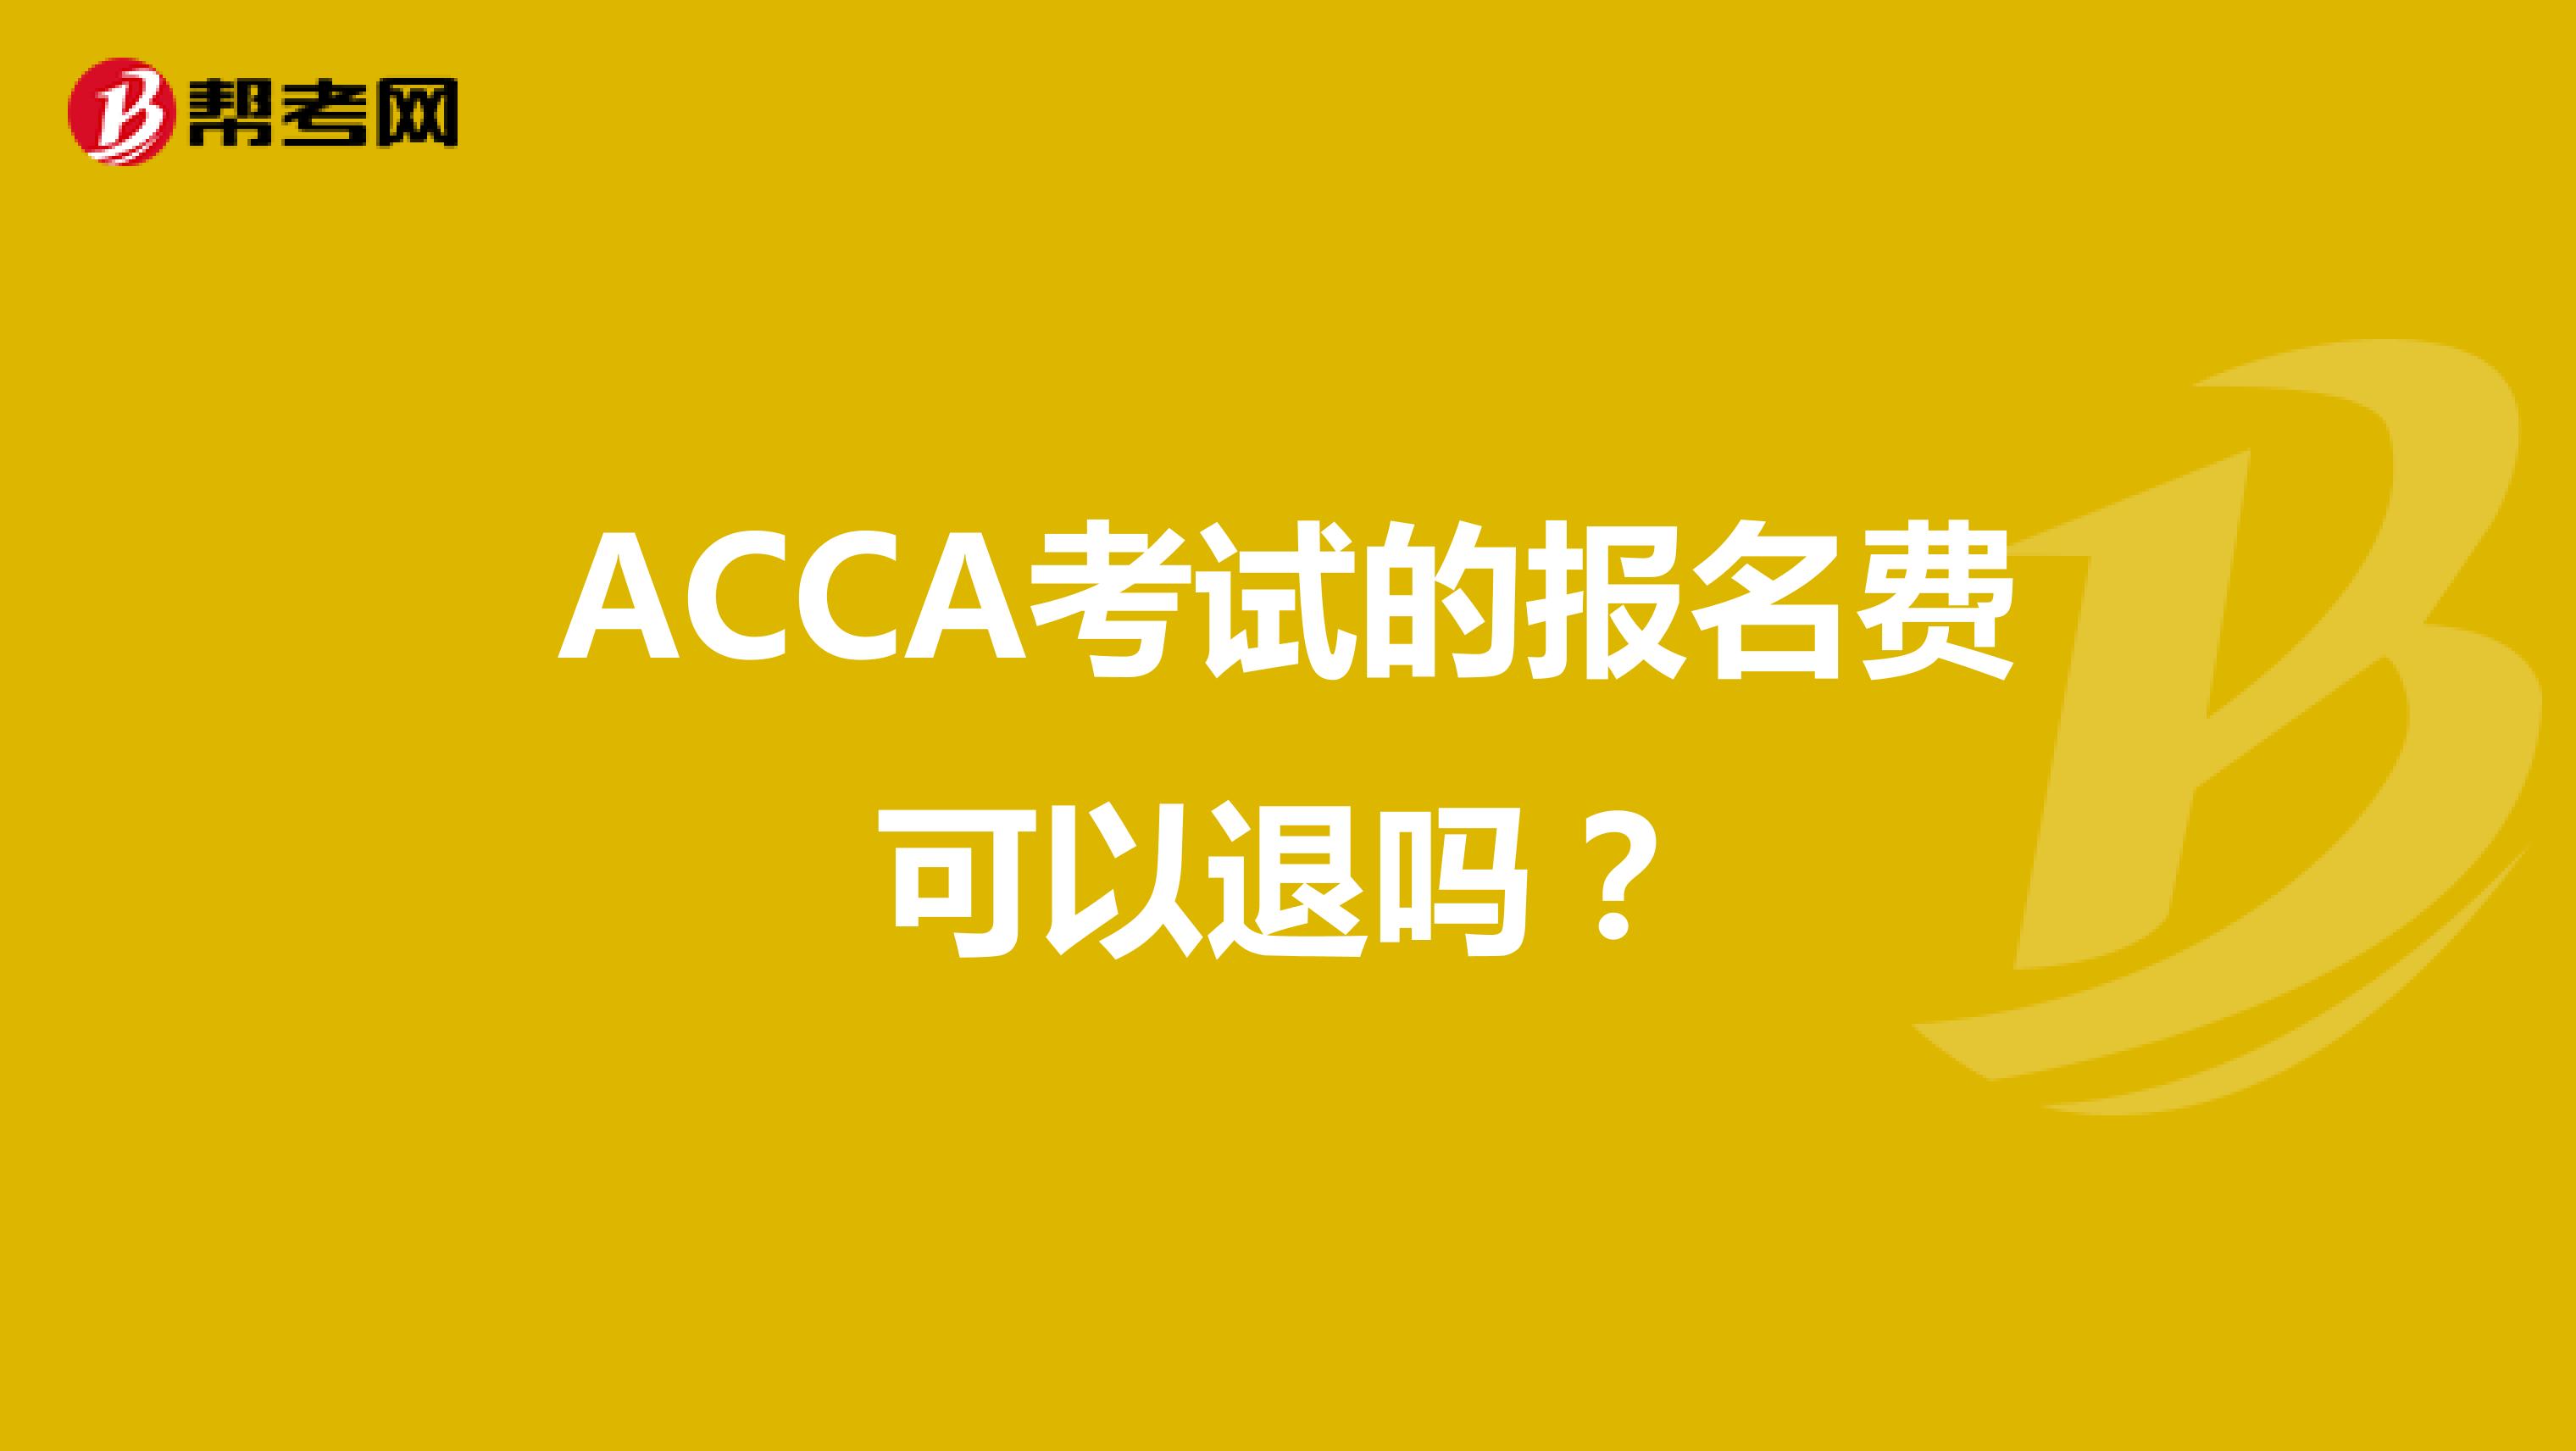 ACCA考试的报名费可以退吗？